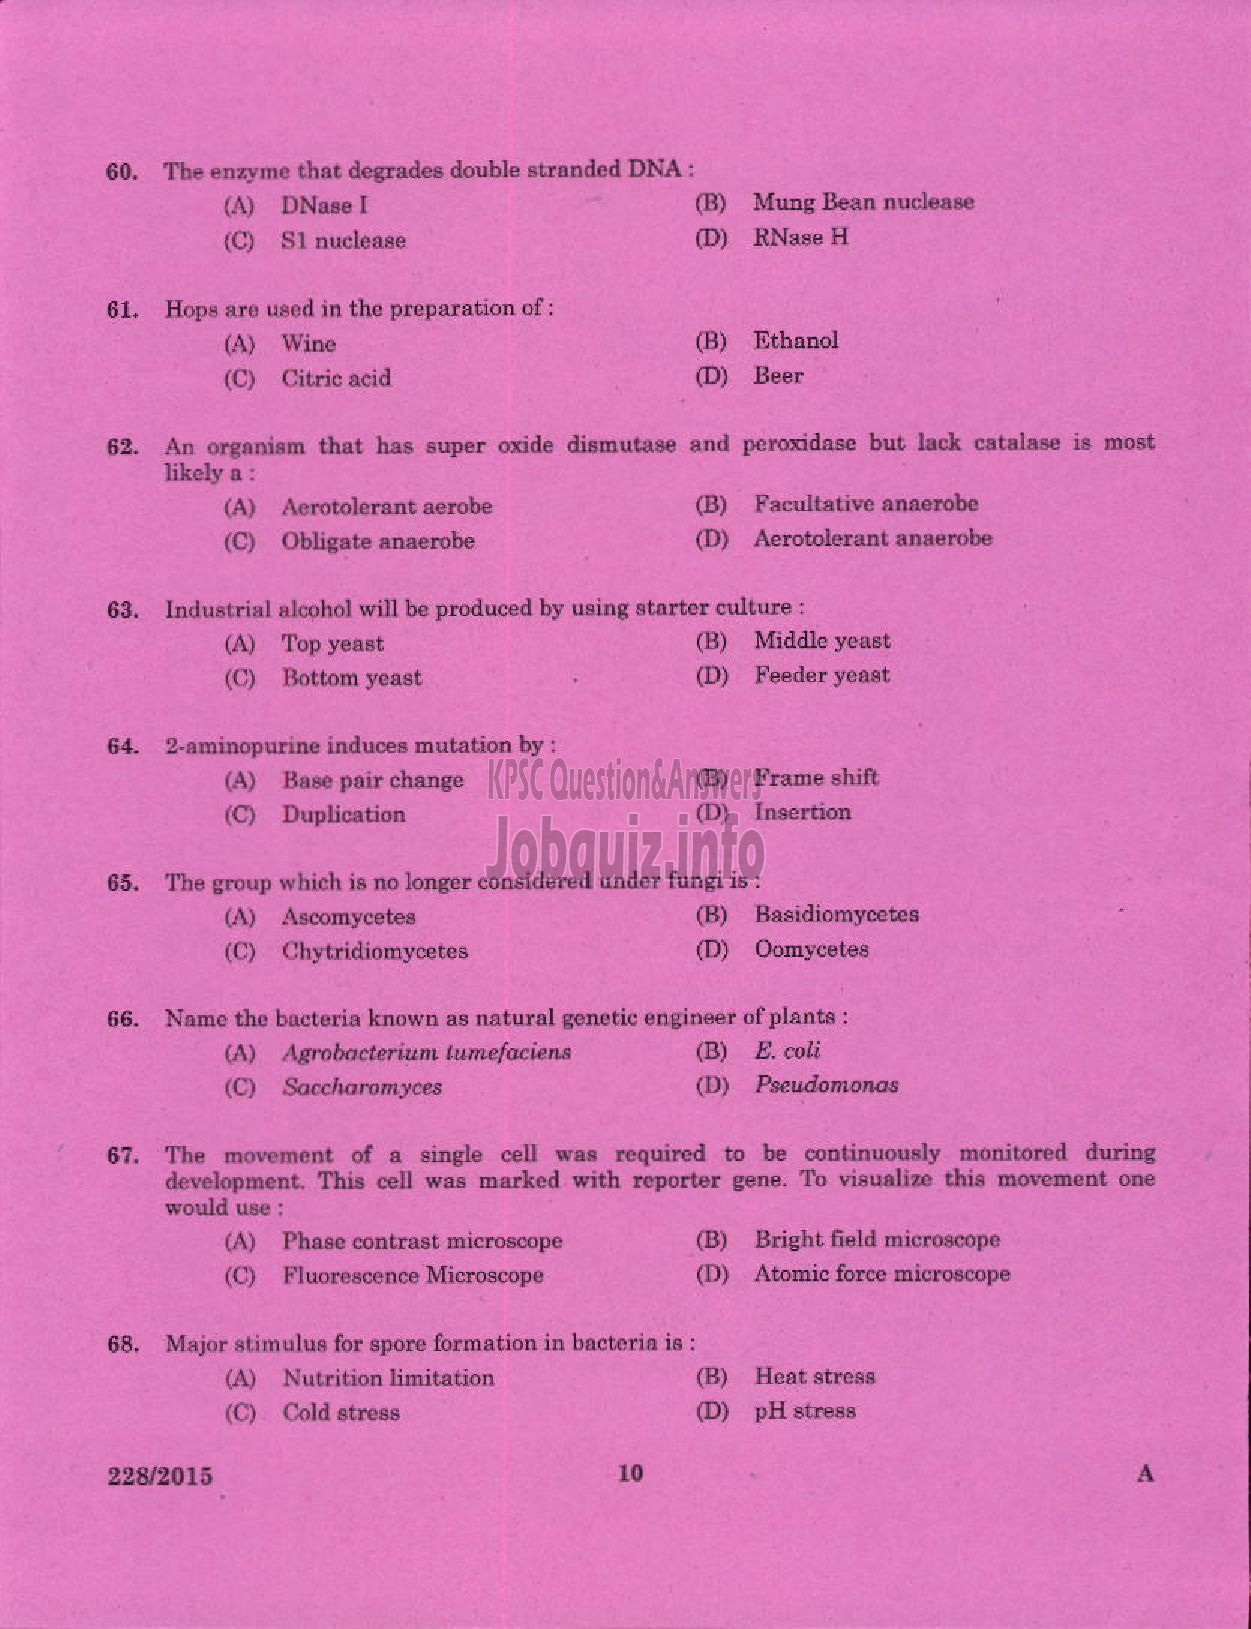 Kerala PSC Question Paper - MICROBIOLOGIST PHARMACEUTICAL CORPORATION IM KERALA LTD-8